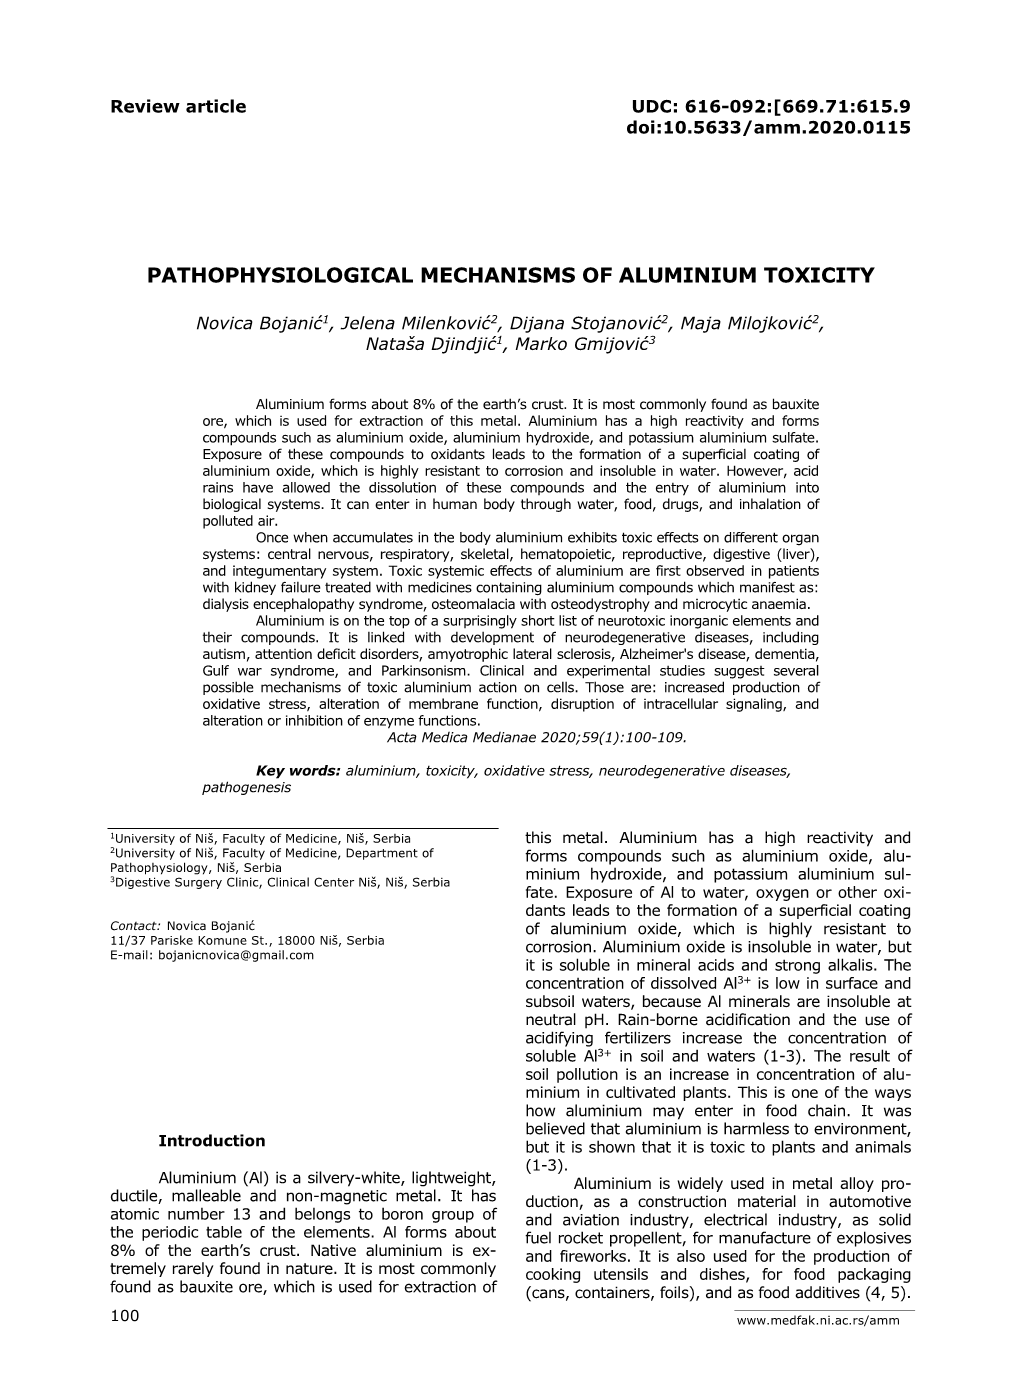 Pathophysiological Mechanisms of Aluminium Toxicity